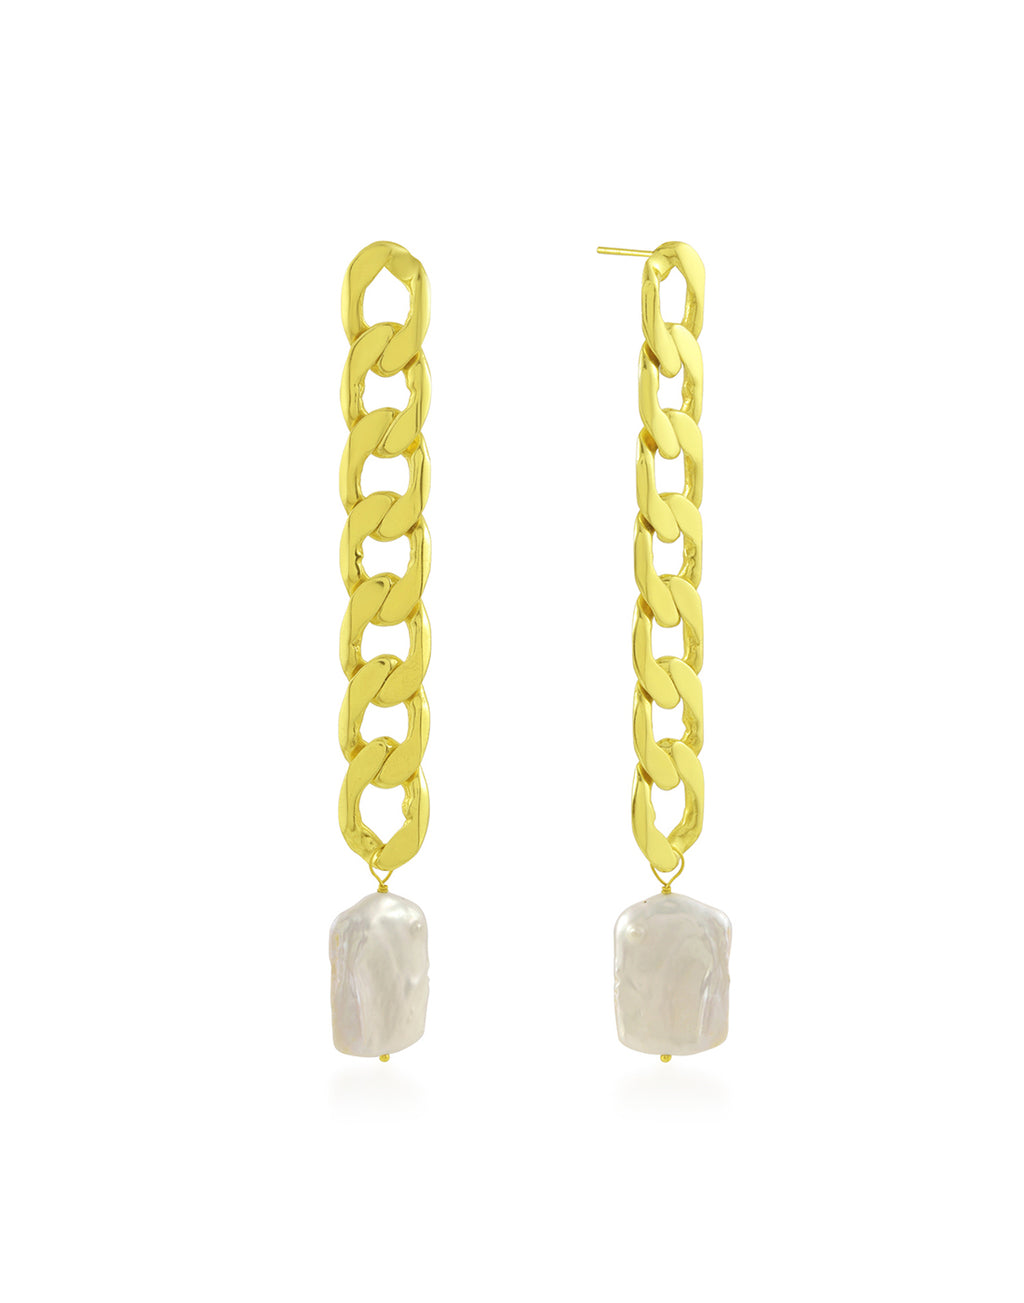 Cuban Chain Baroque Pearl Earrings - Statement Earrings - Gold-Plated & Hypoallergenic Jewellery - Made in India - Dubai Jewellery - Dori